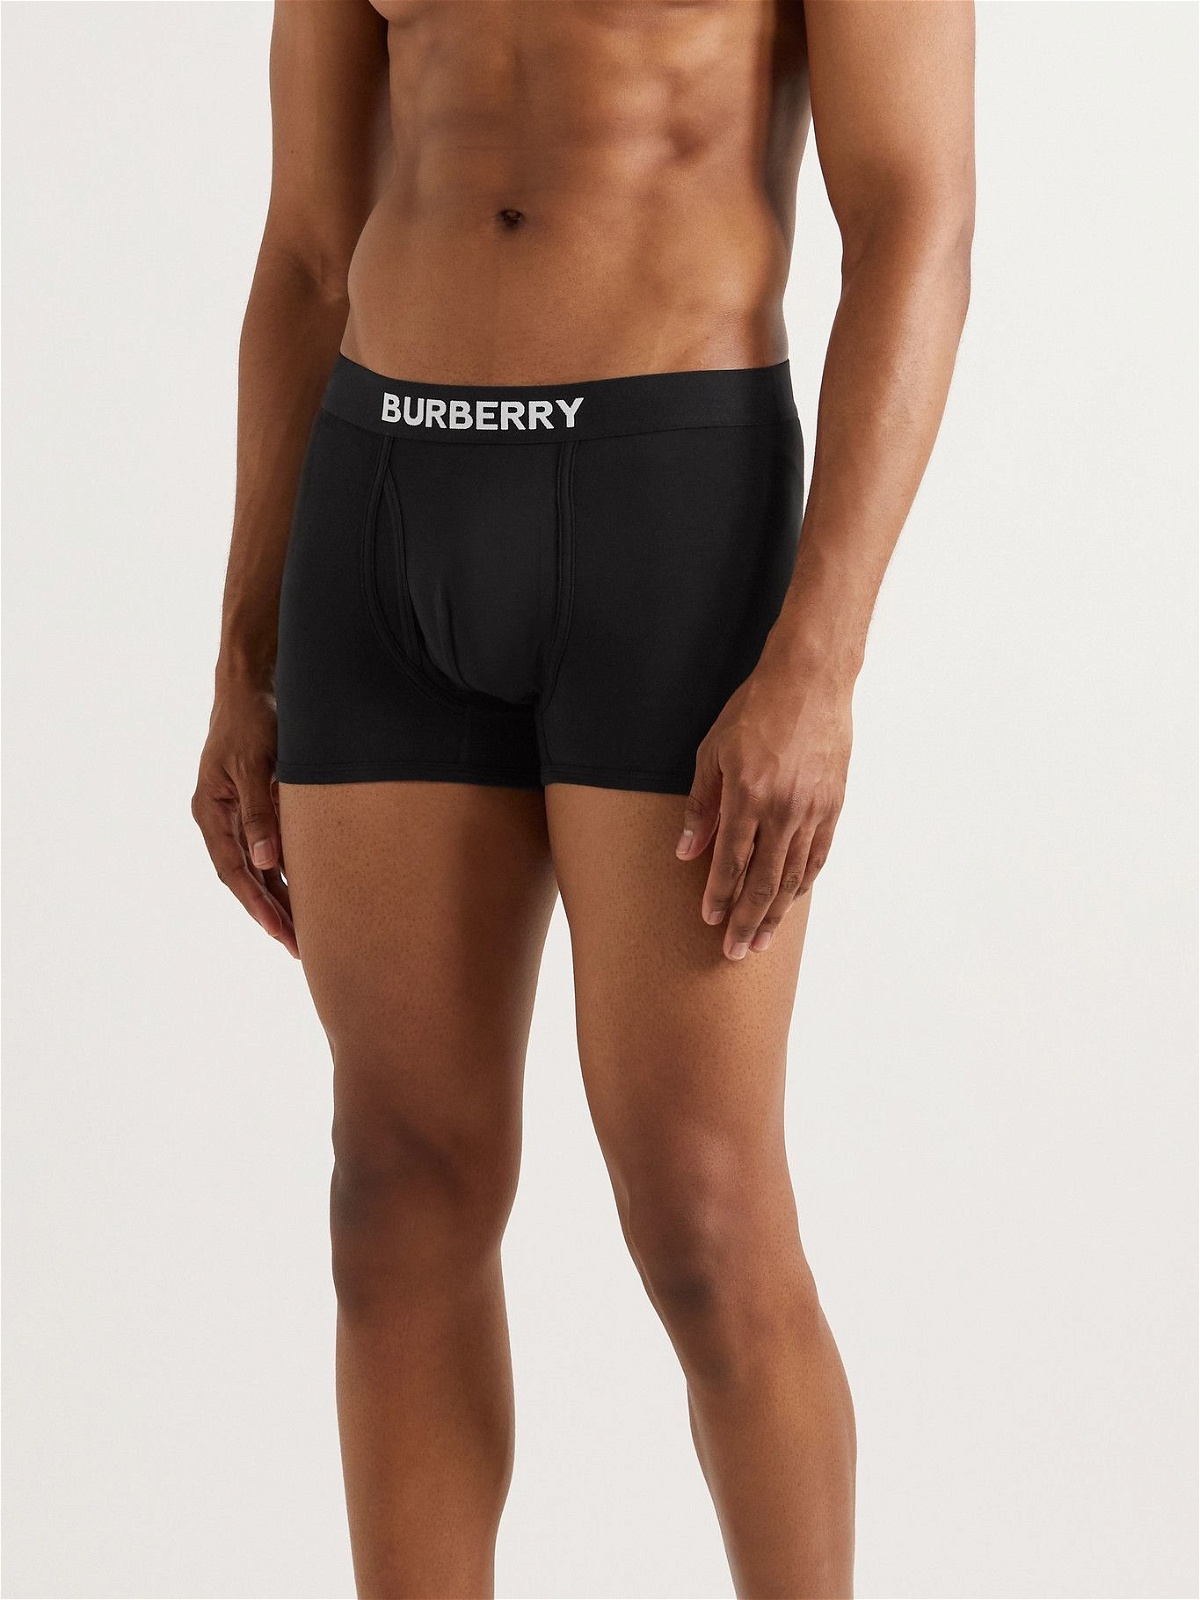 Burberry - Stretch-Cotton Jersey Boxer Briefs - Black Burberry